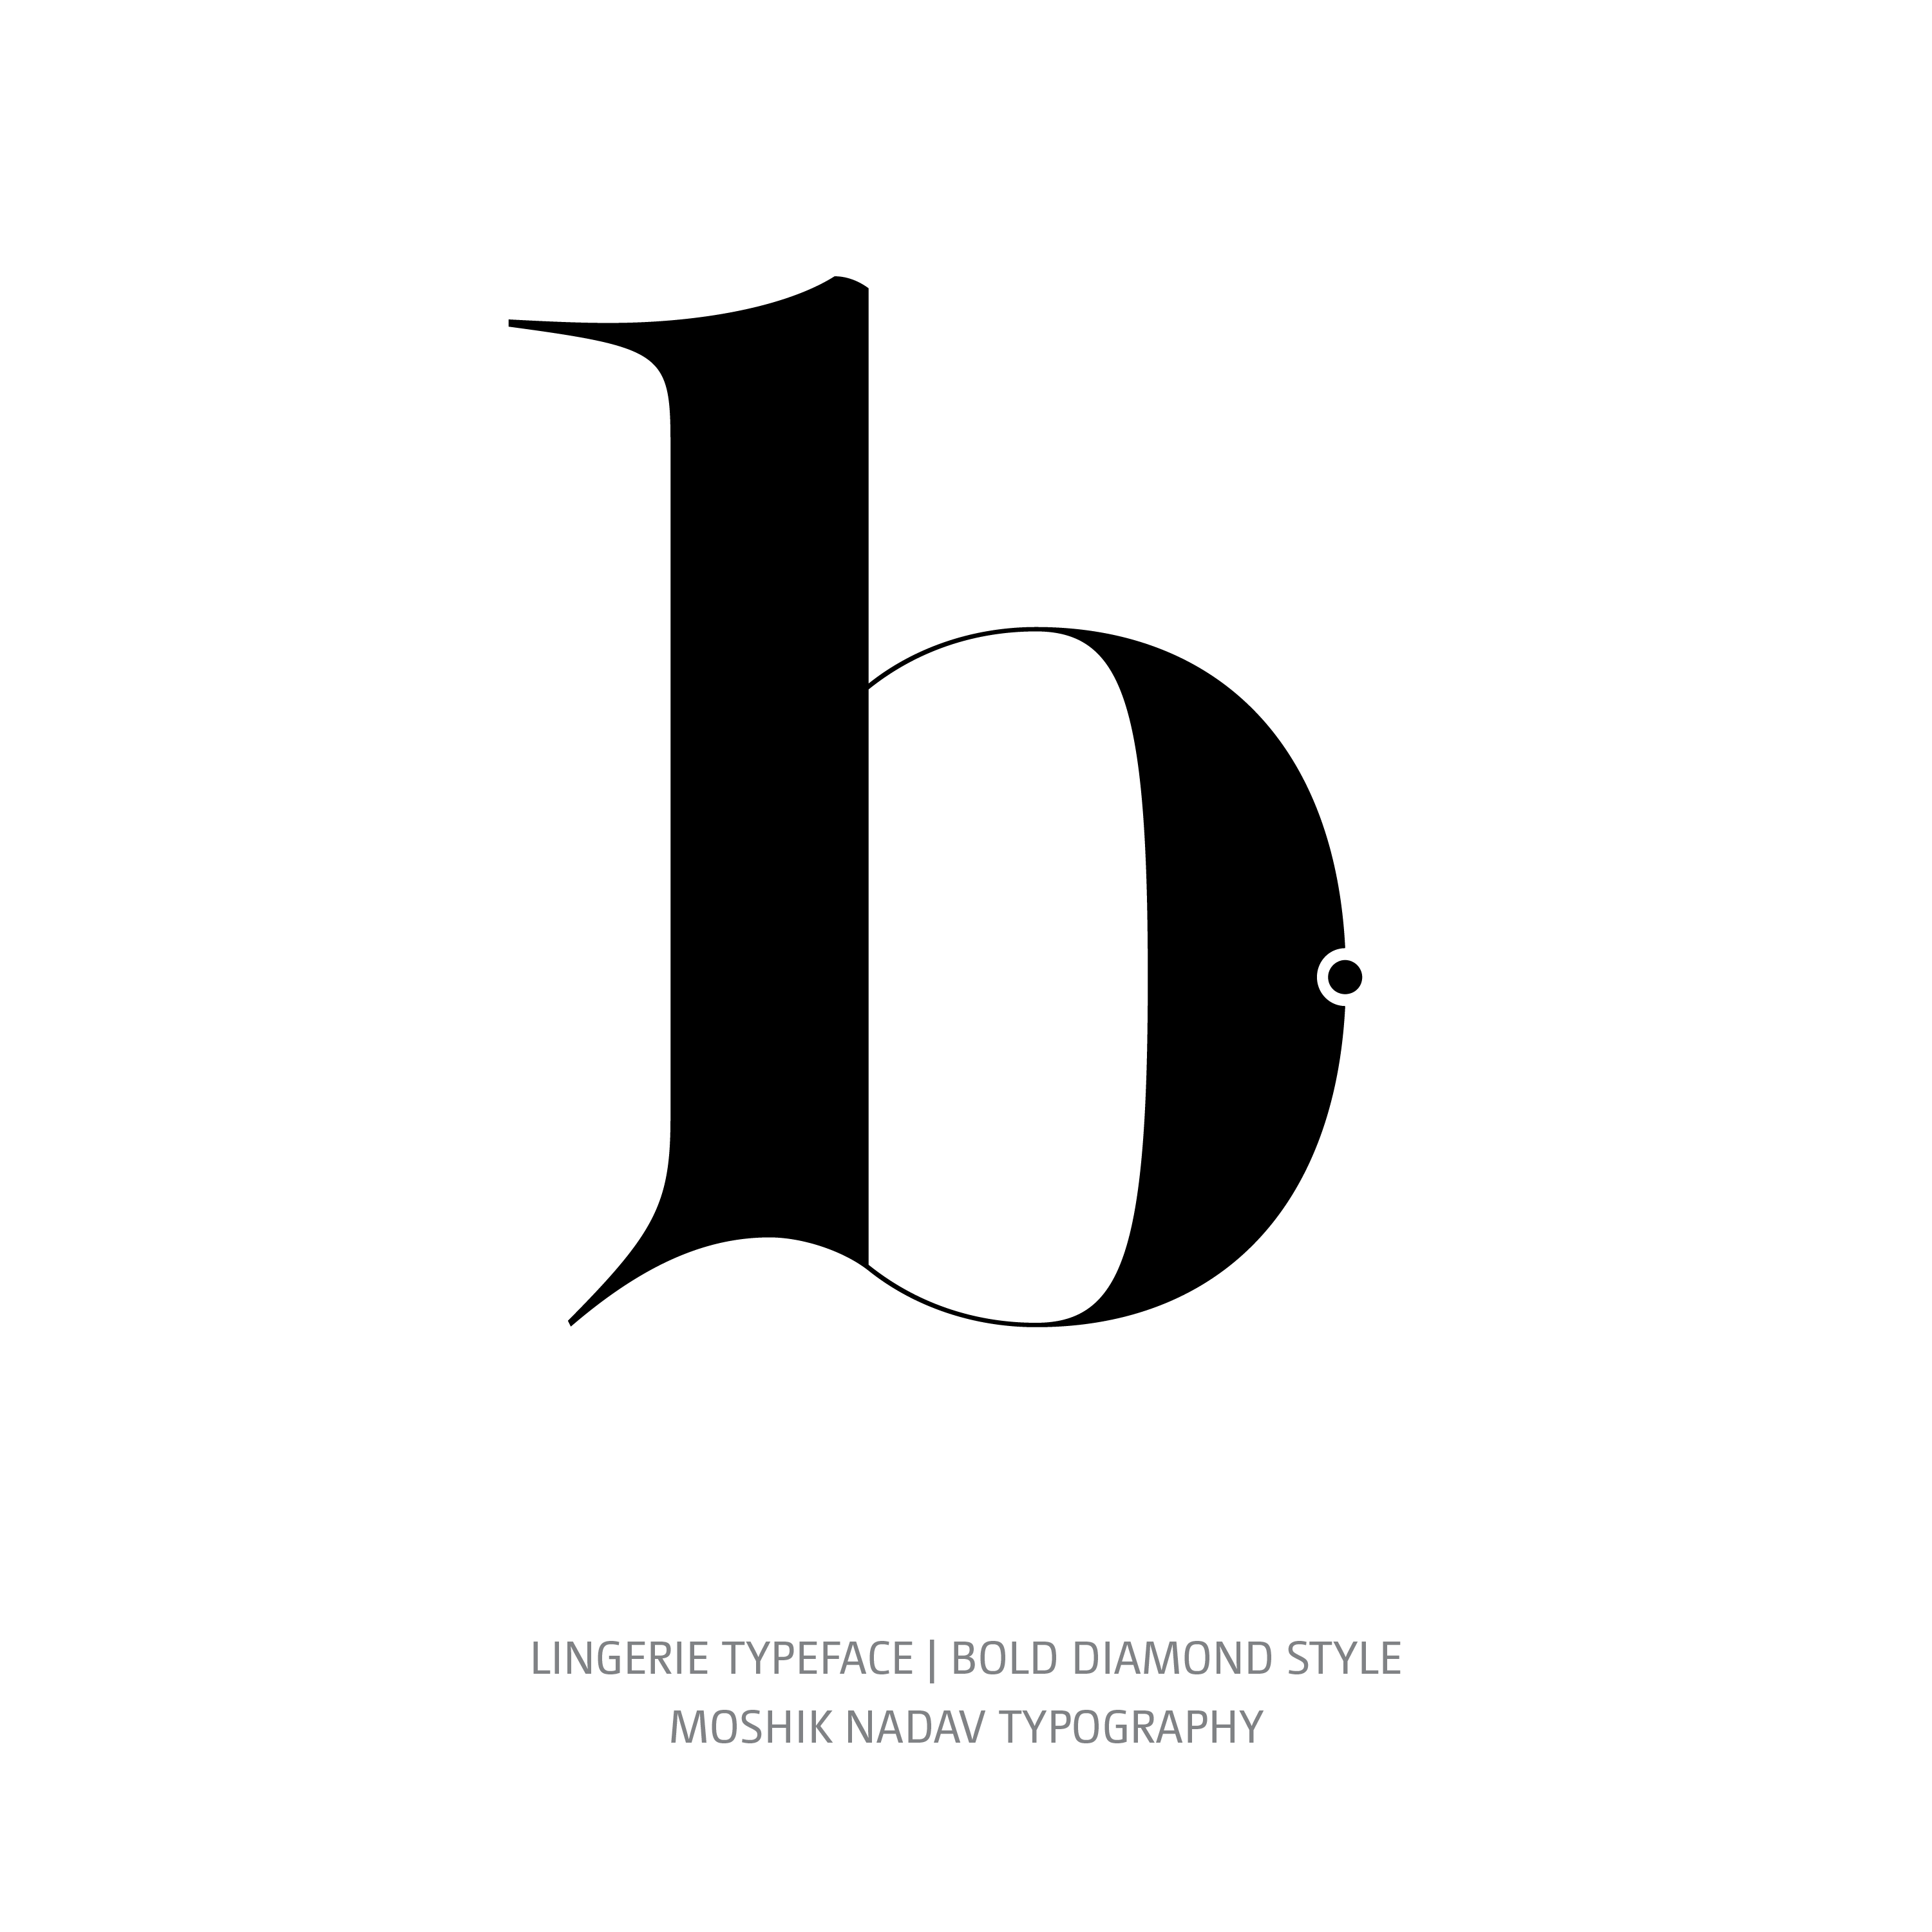 Lingerie Typeface Bold Diamond b